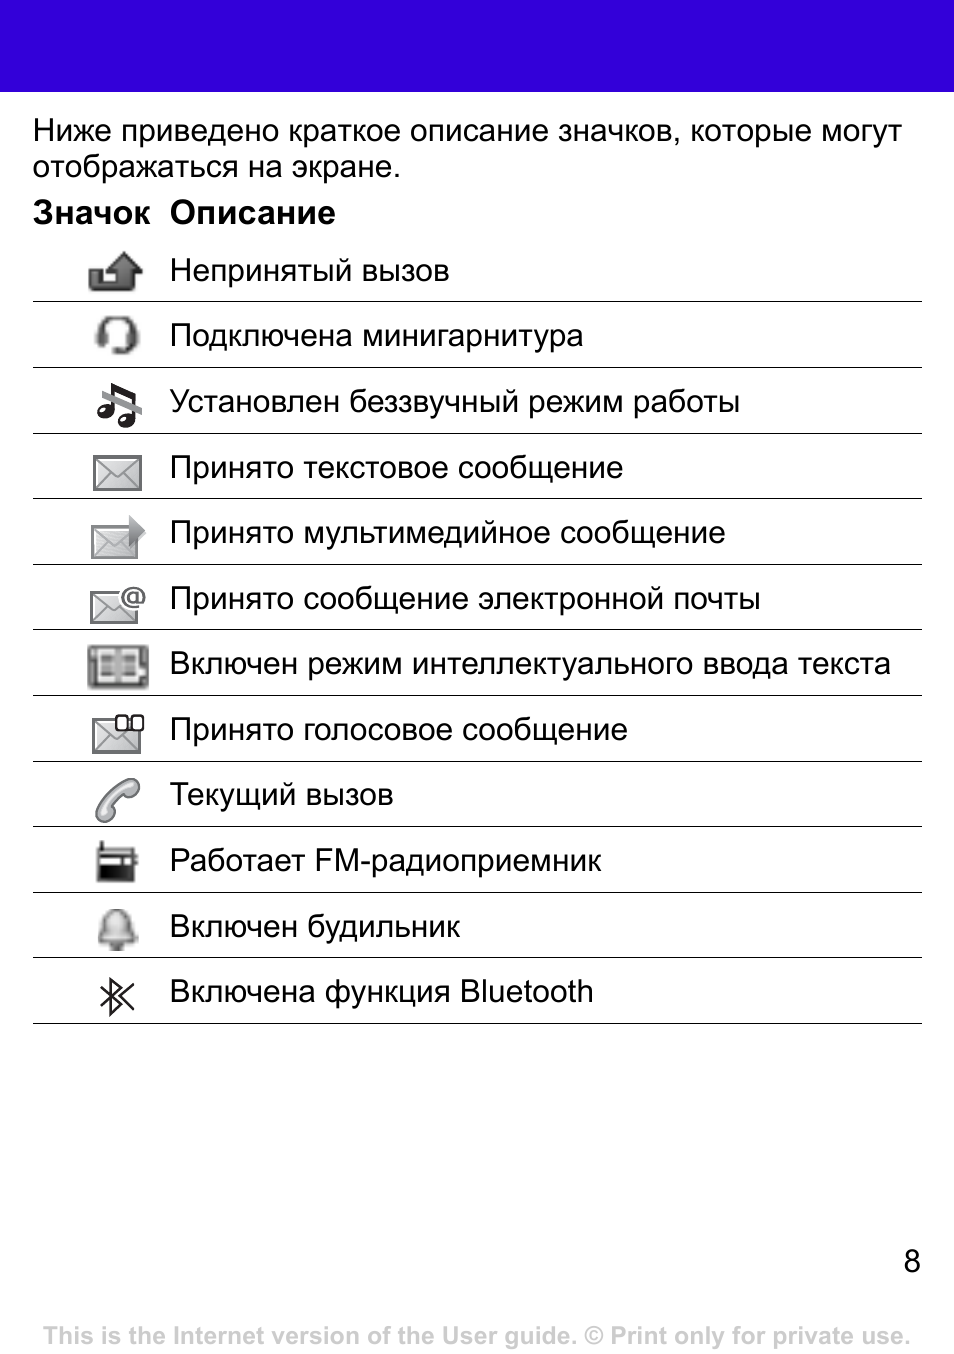 Что означают значки в панели уведомлений на android – подробно обо всех видах значков уведомлений [2020]